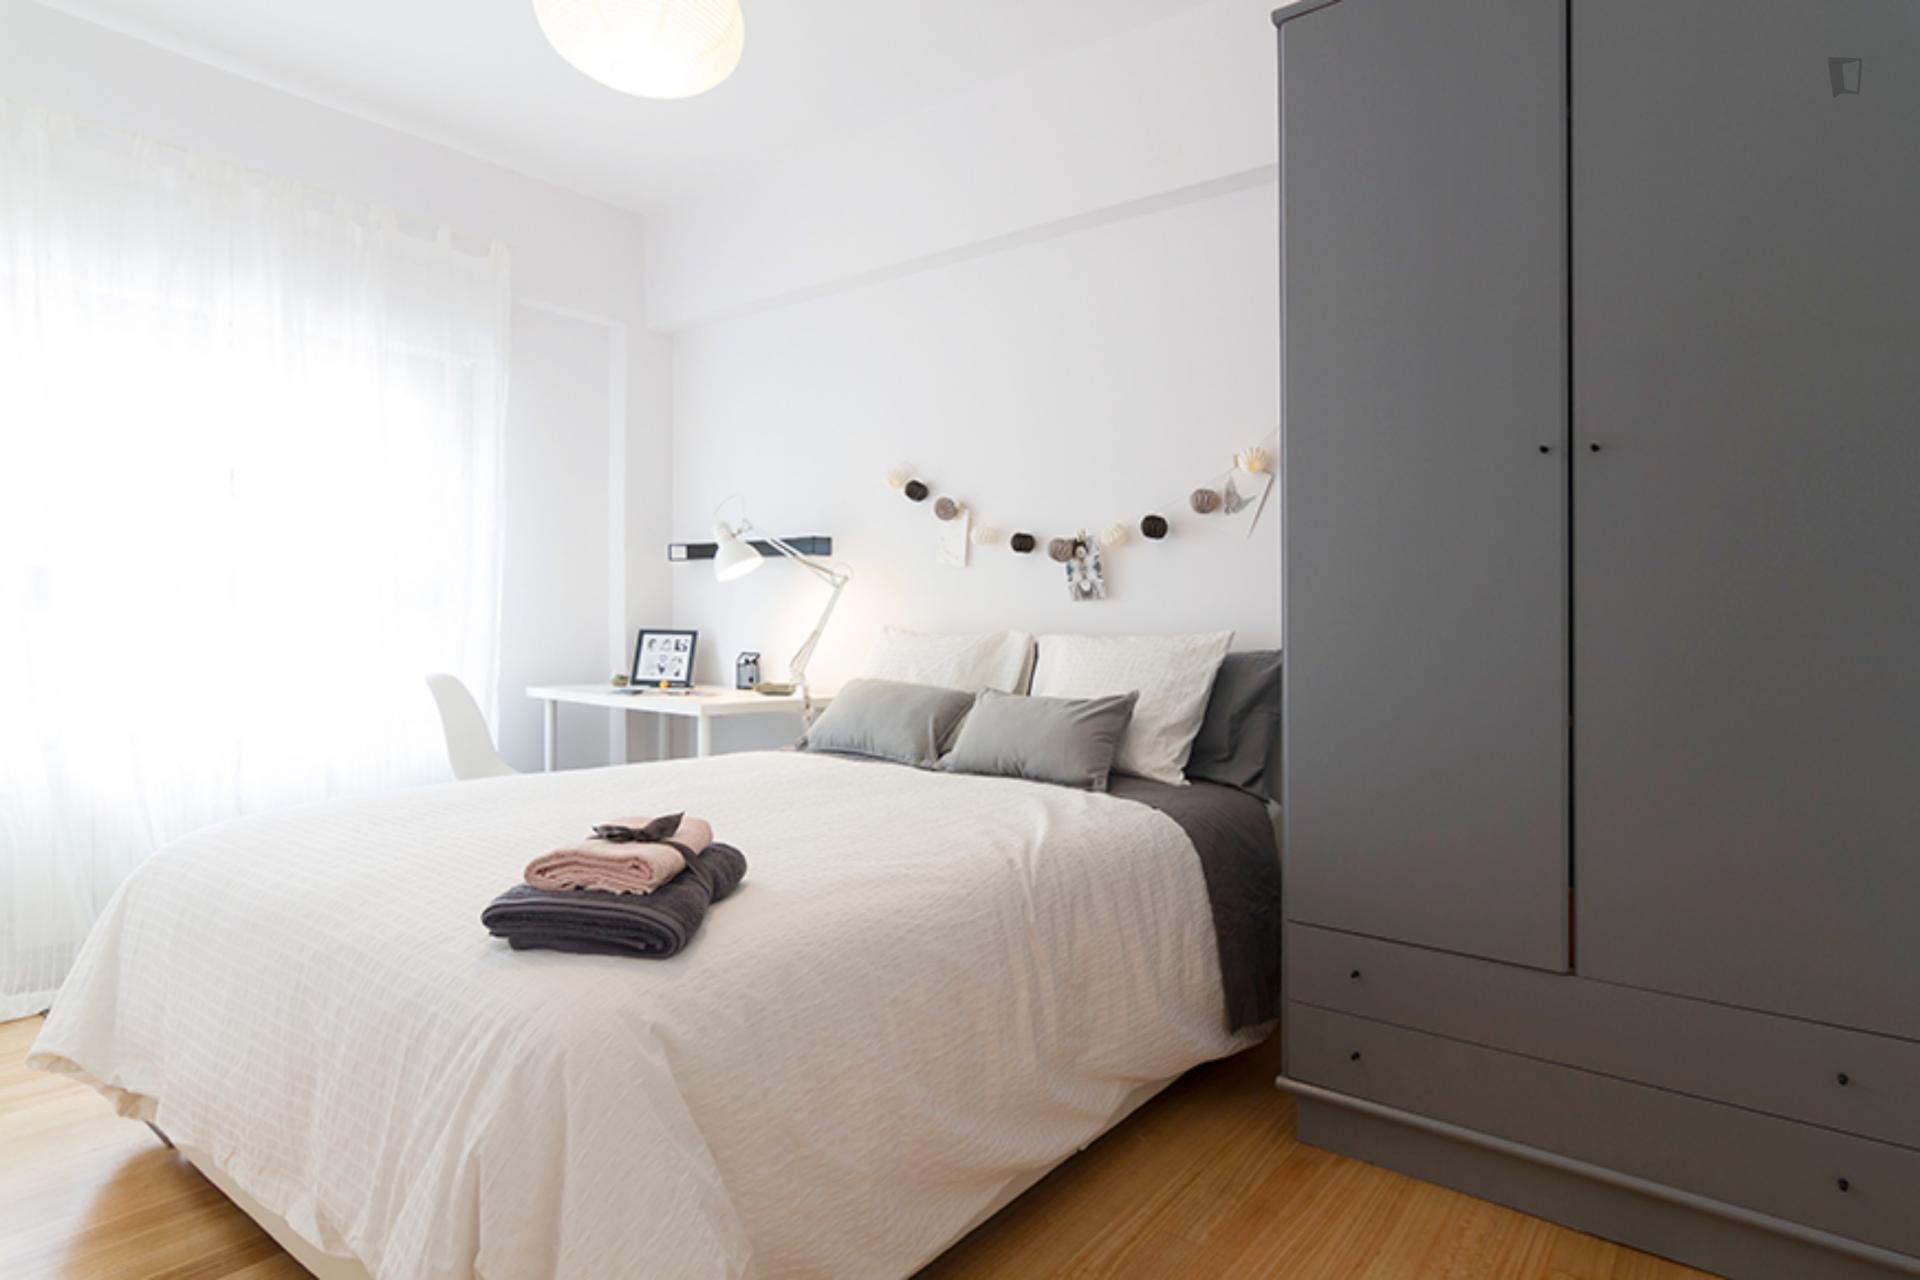 Kalea 19- Elegant Room in shared flat in Bilbao